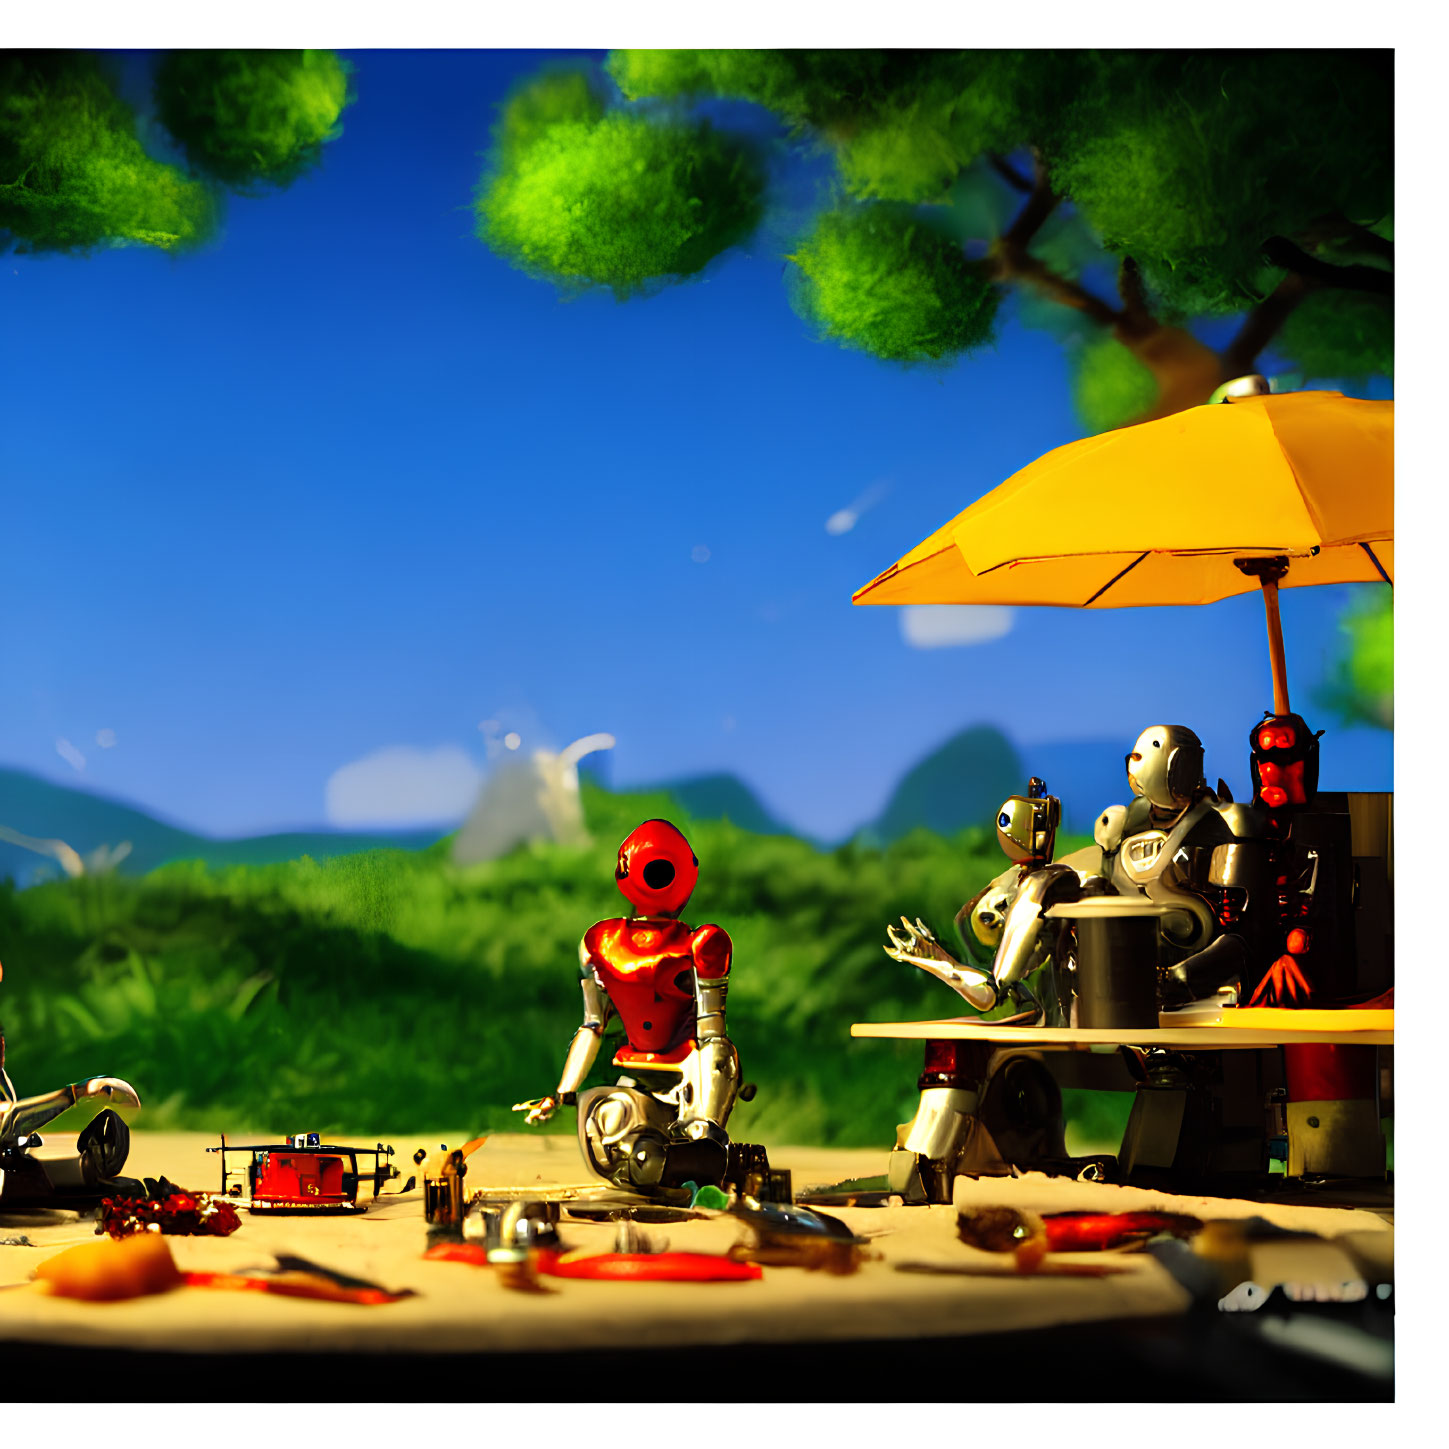 Toy scene featuring humanoid robots relaxing under umbrella